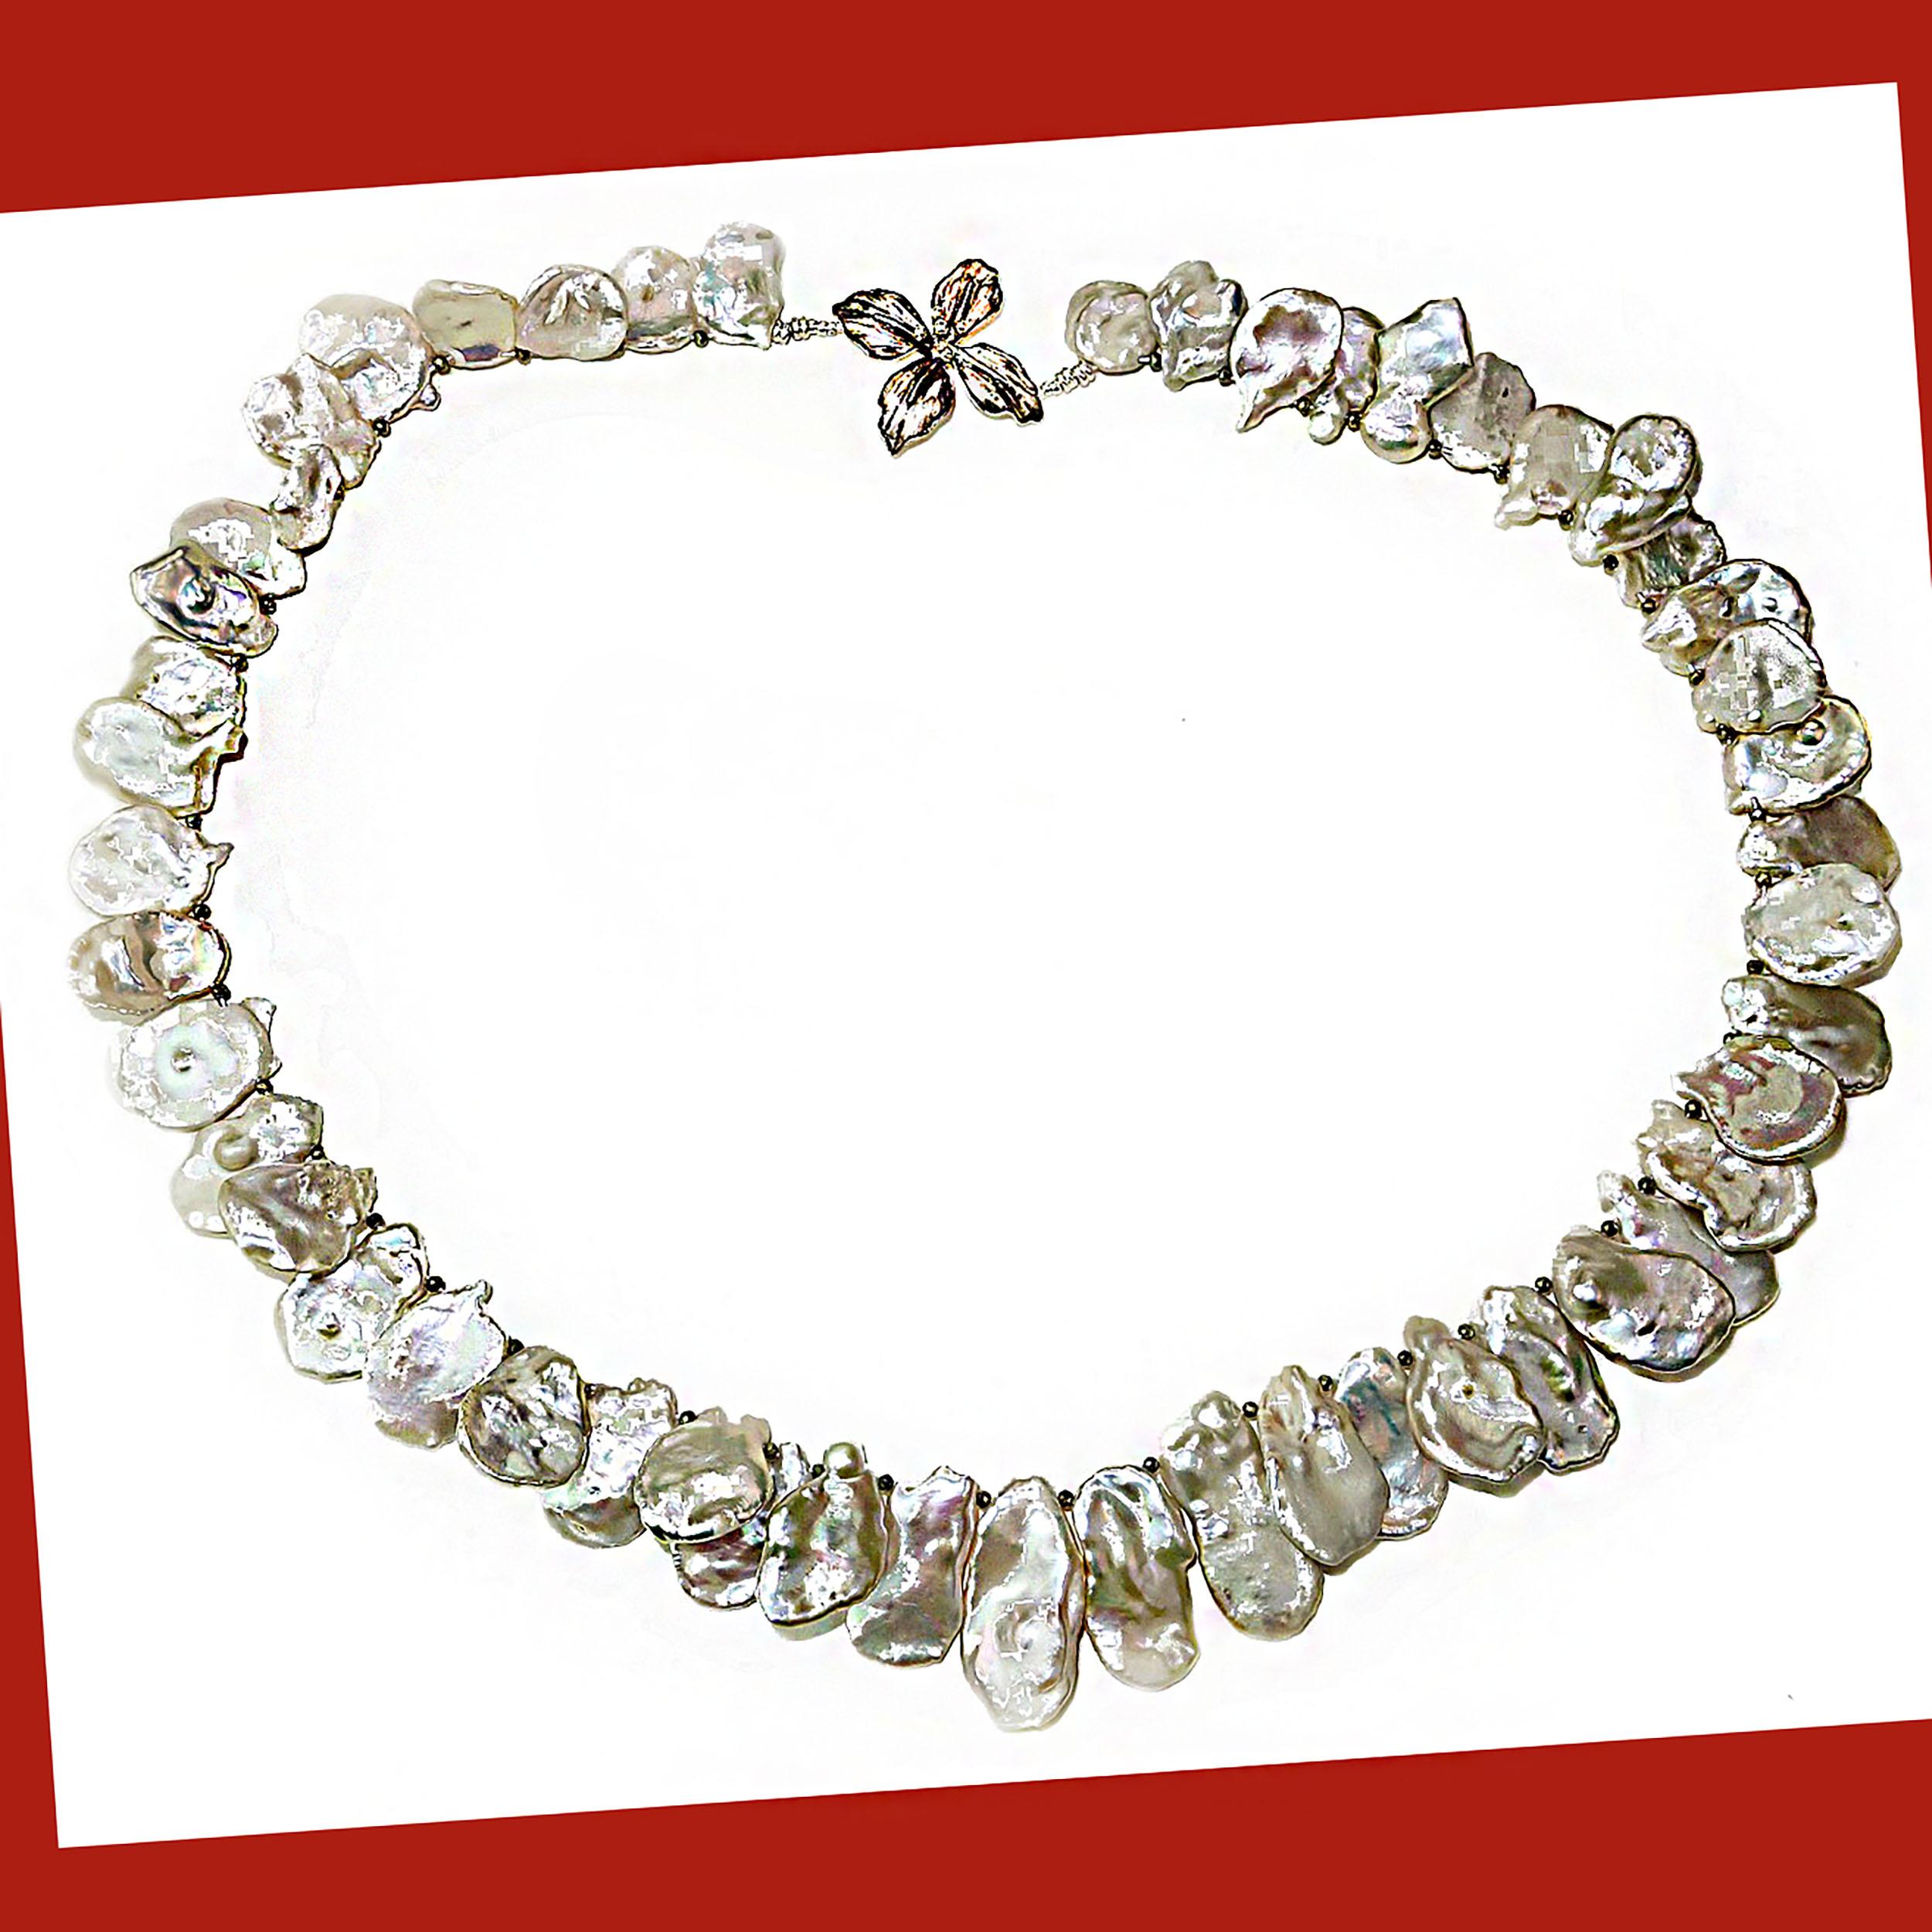 AJD Matinee Long collier de perles Keshi blanches et iridescentes, pierre de naissance de juin 1